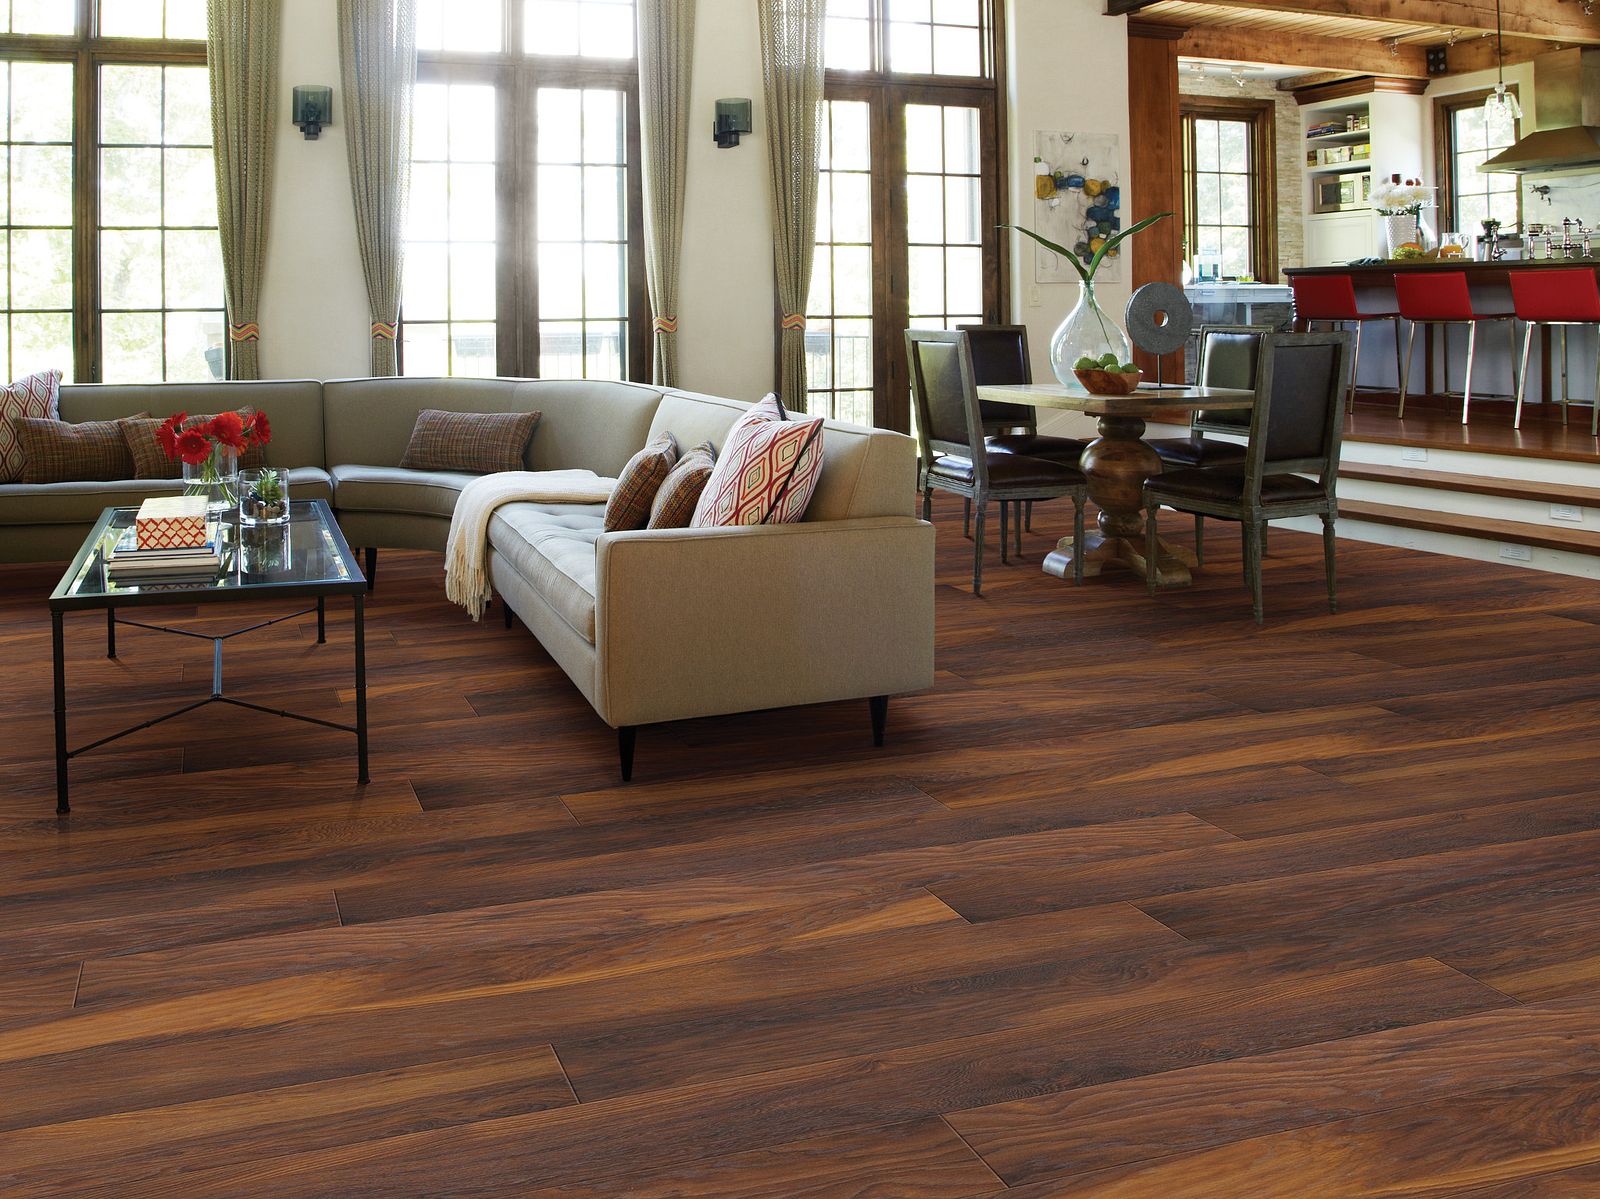 How To Clean Wood Laminate Floors, Laminate Flooring Living Room